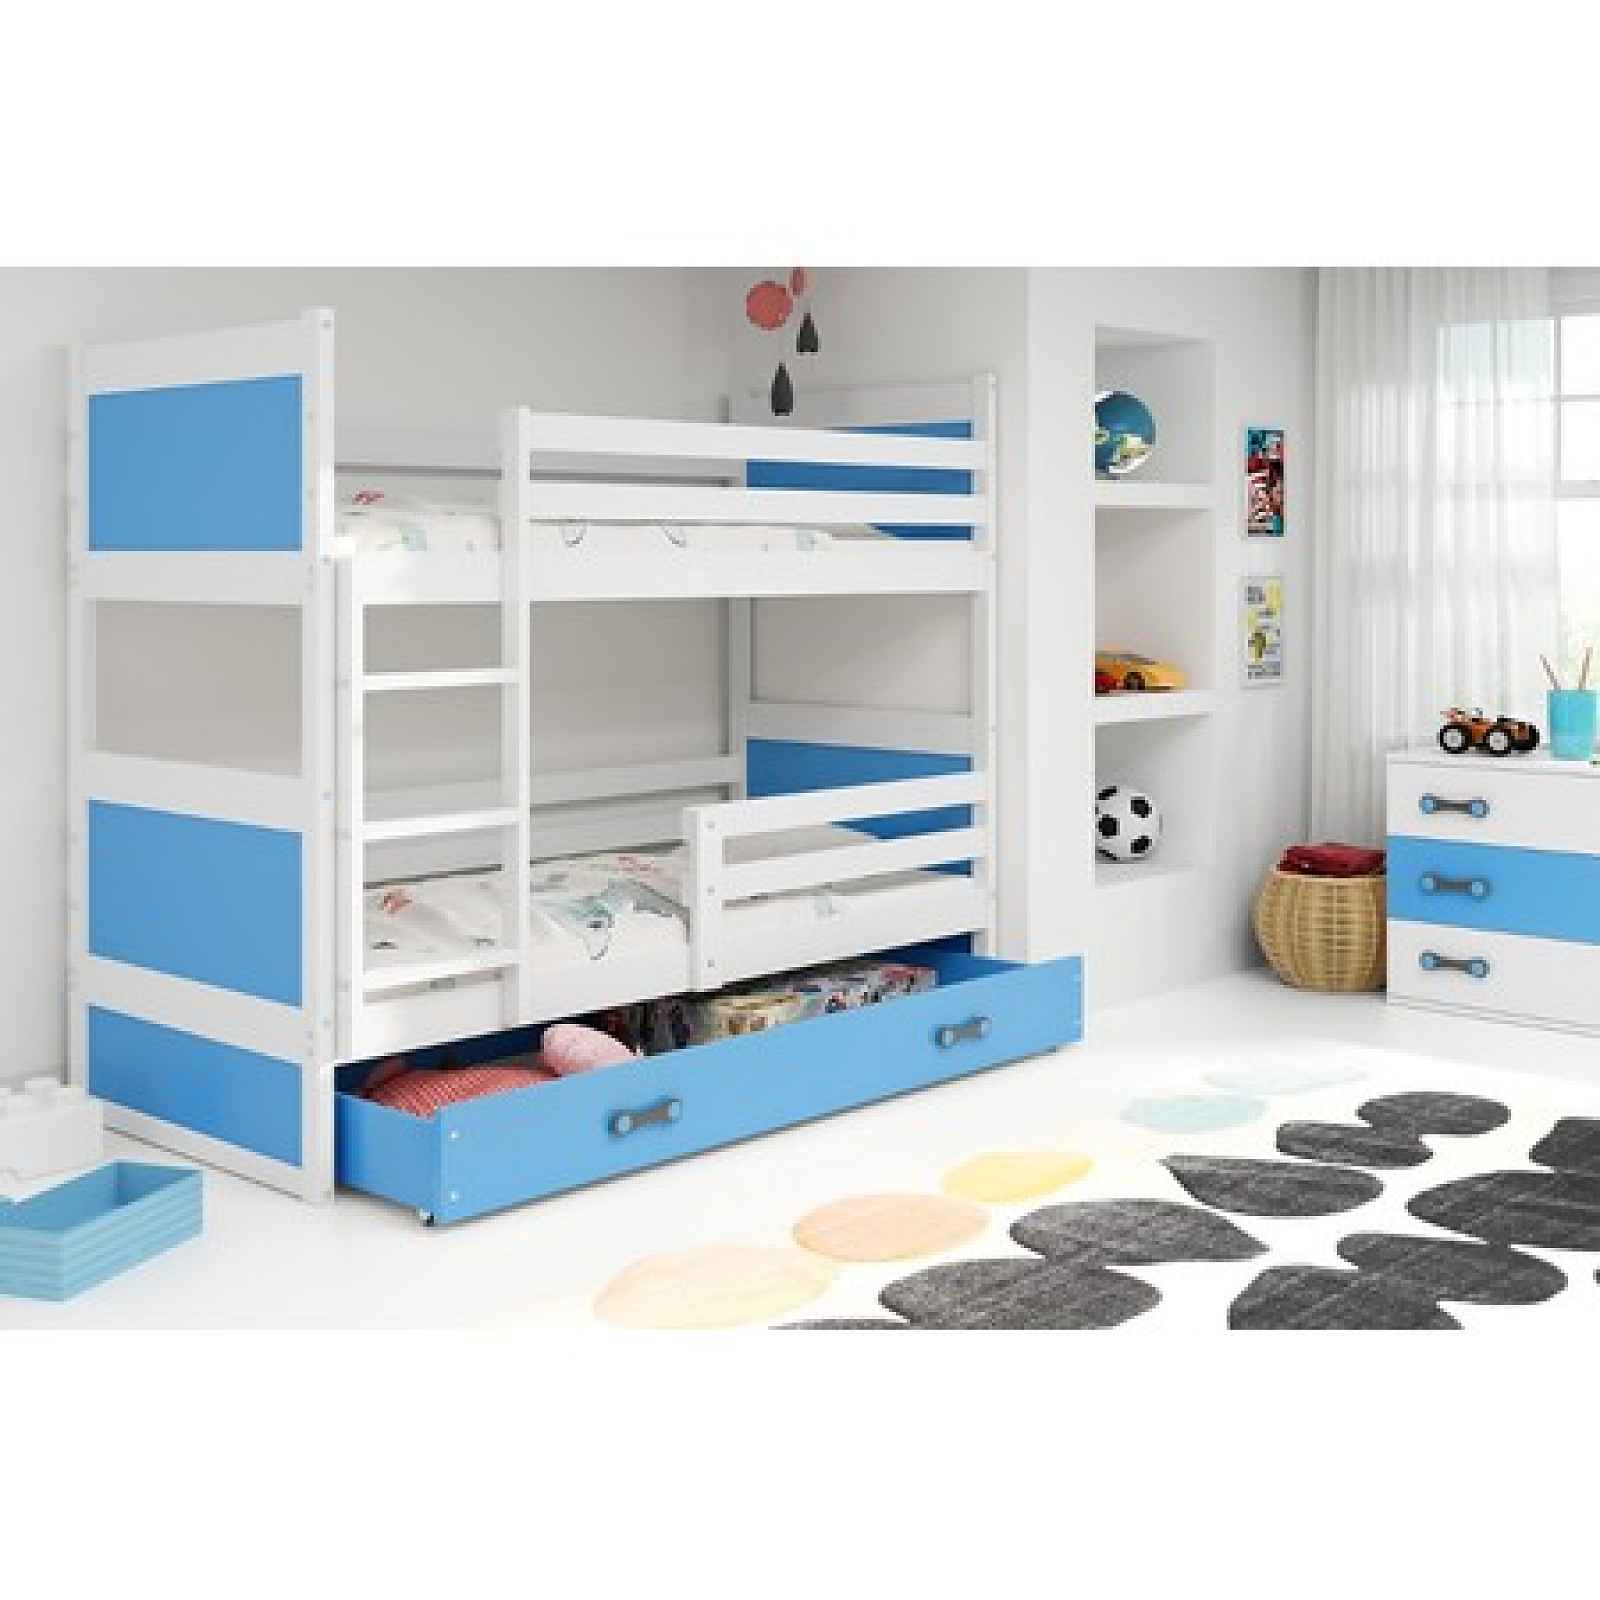 Dětská patrová postel RICO 200x90 cm Bílá Modrá